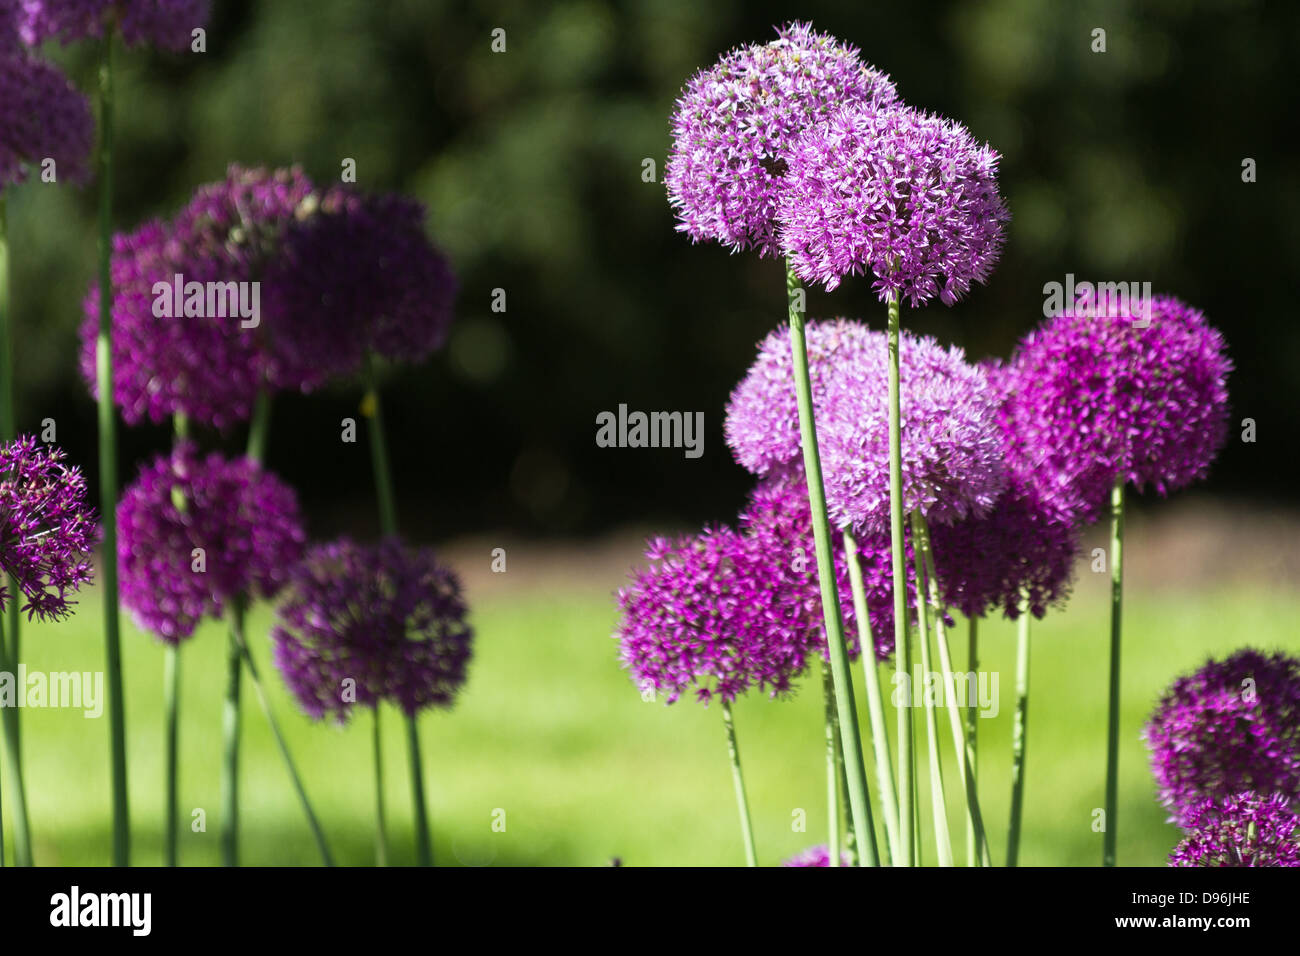 Purple alium onion flower close up shot Stock Photo